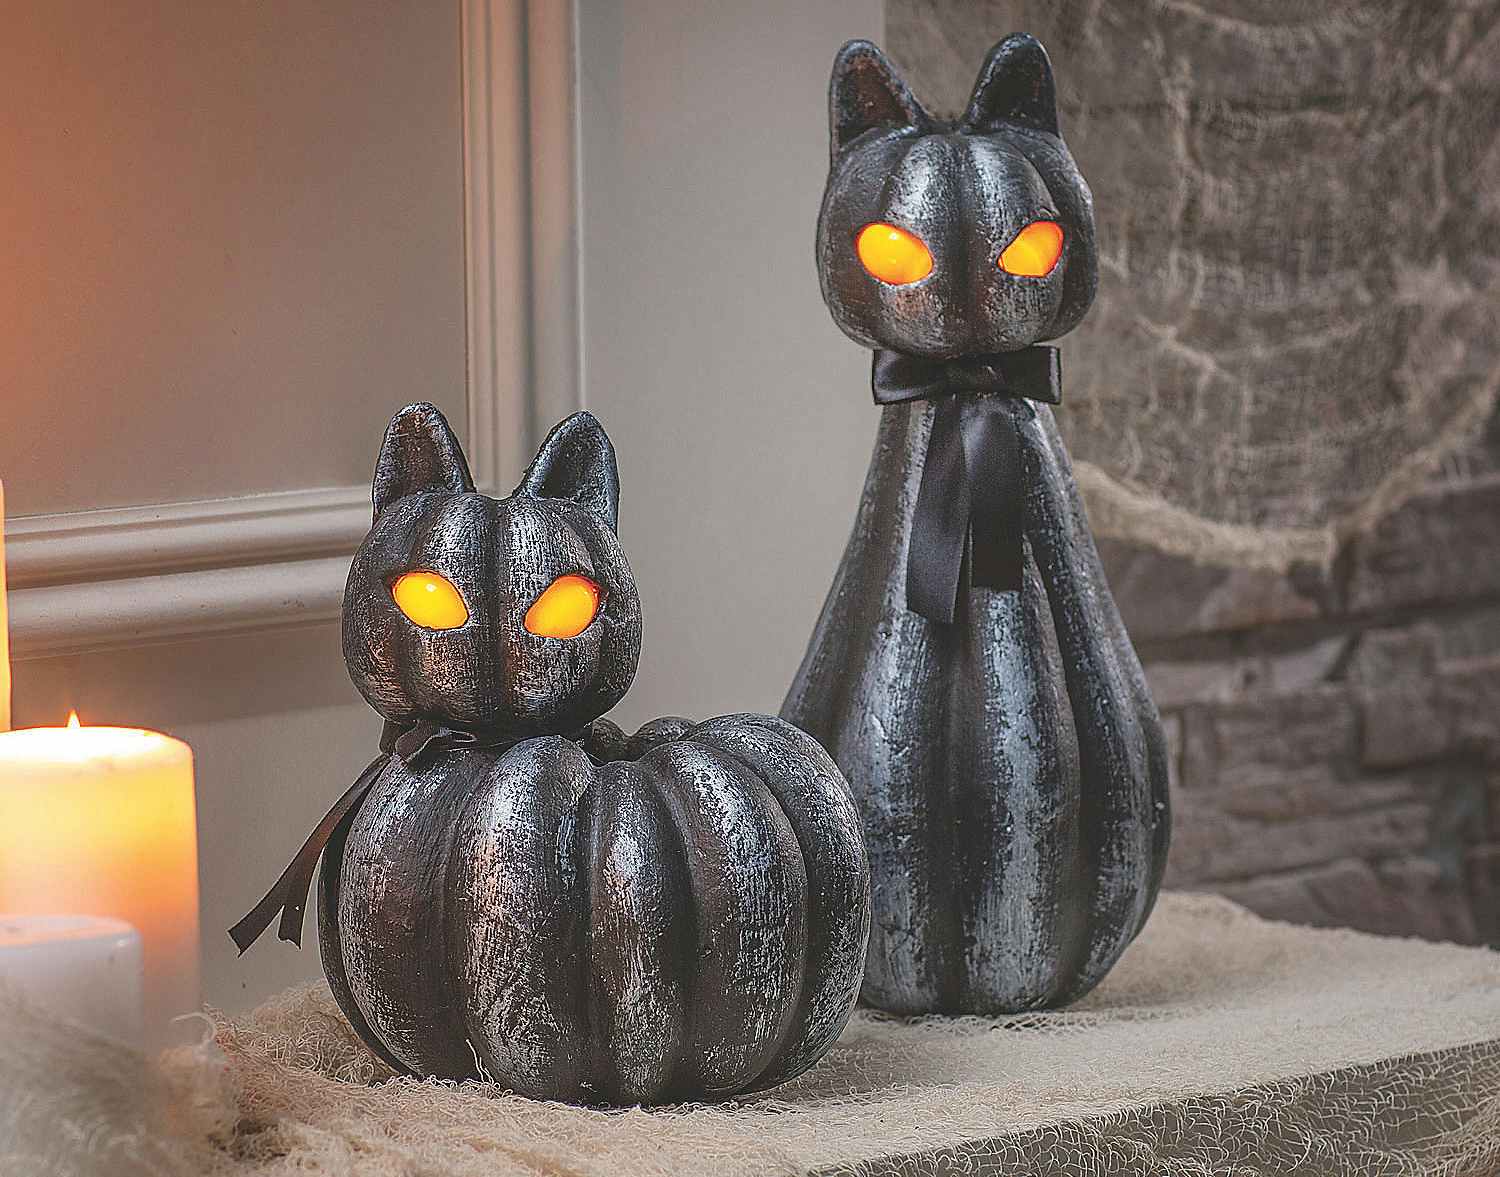 Light-up black cat pumpkin decorations on a table.